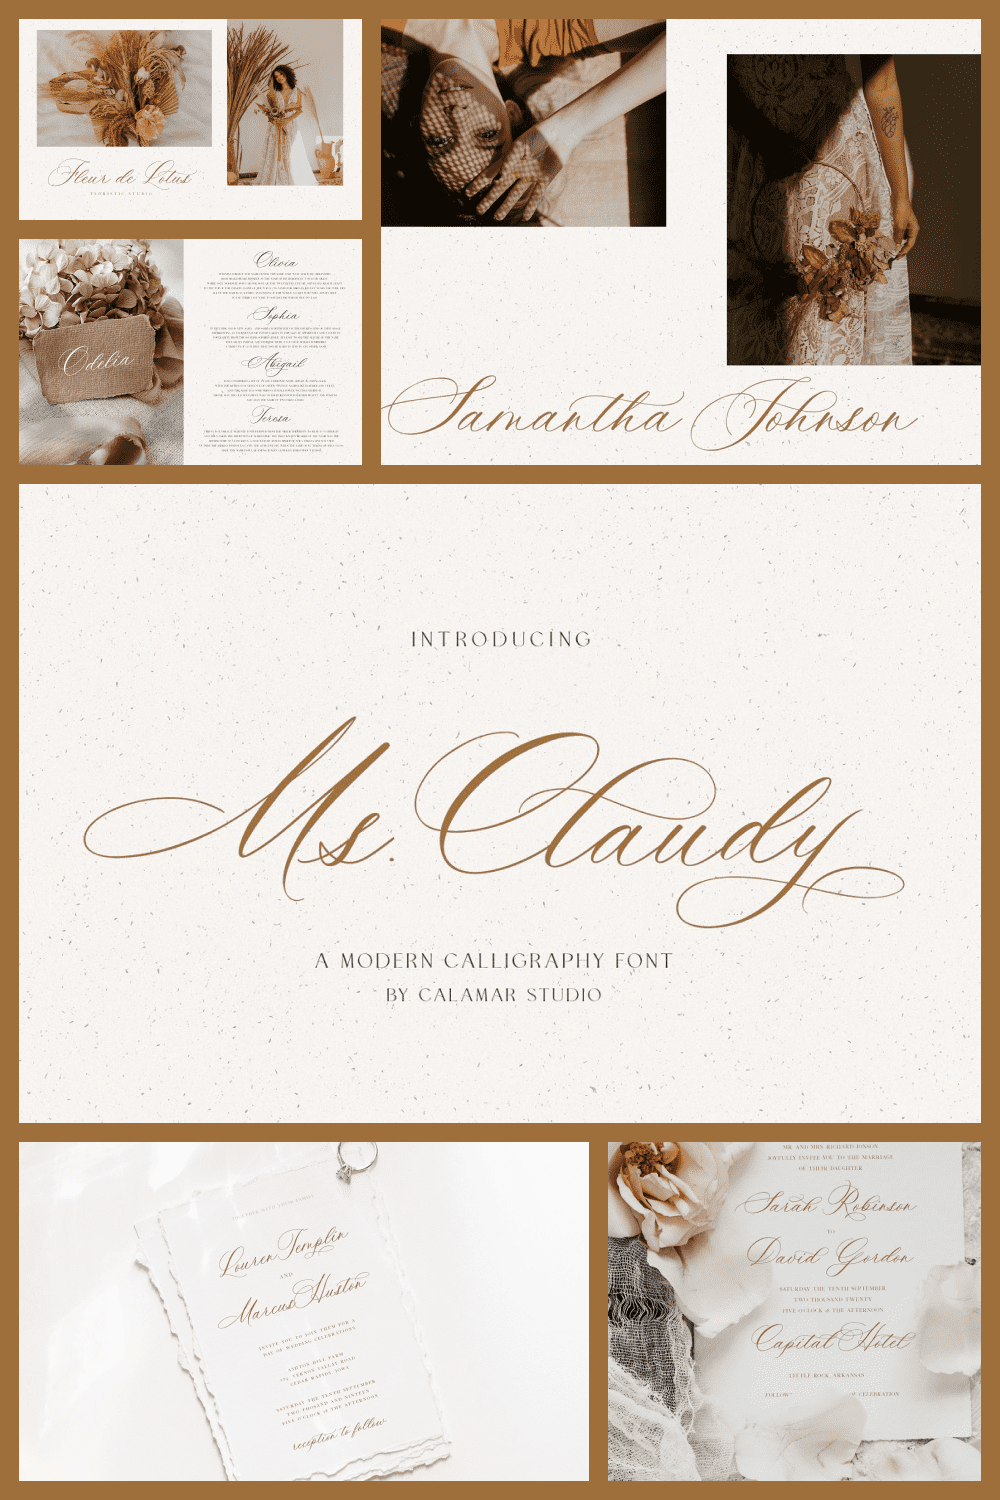 Ms Claudy – Wedding Font.